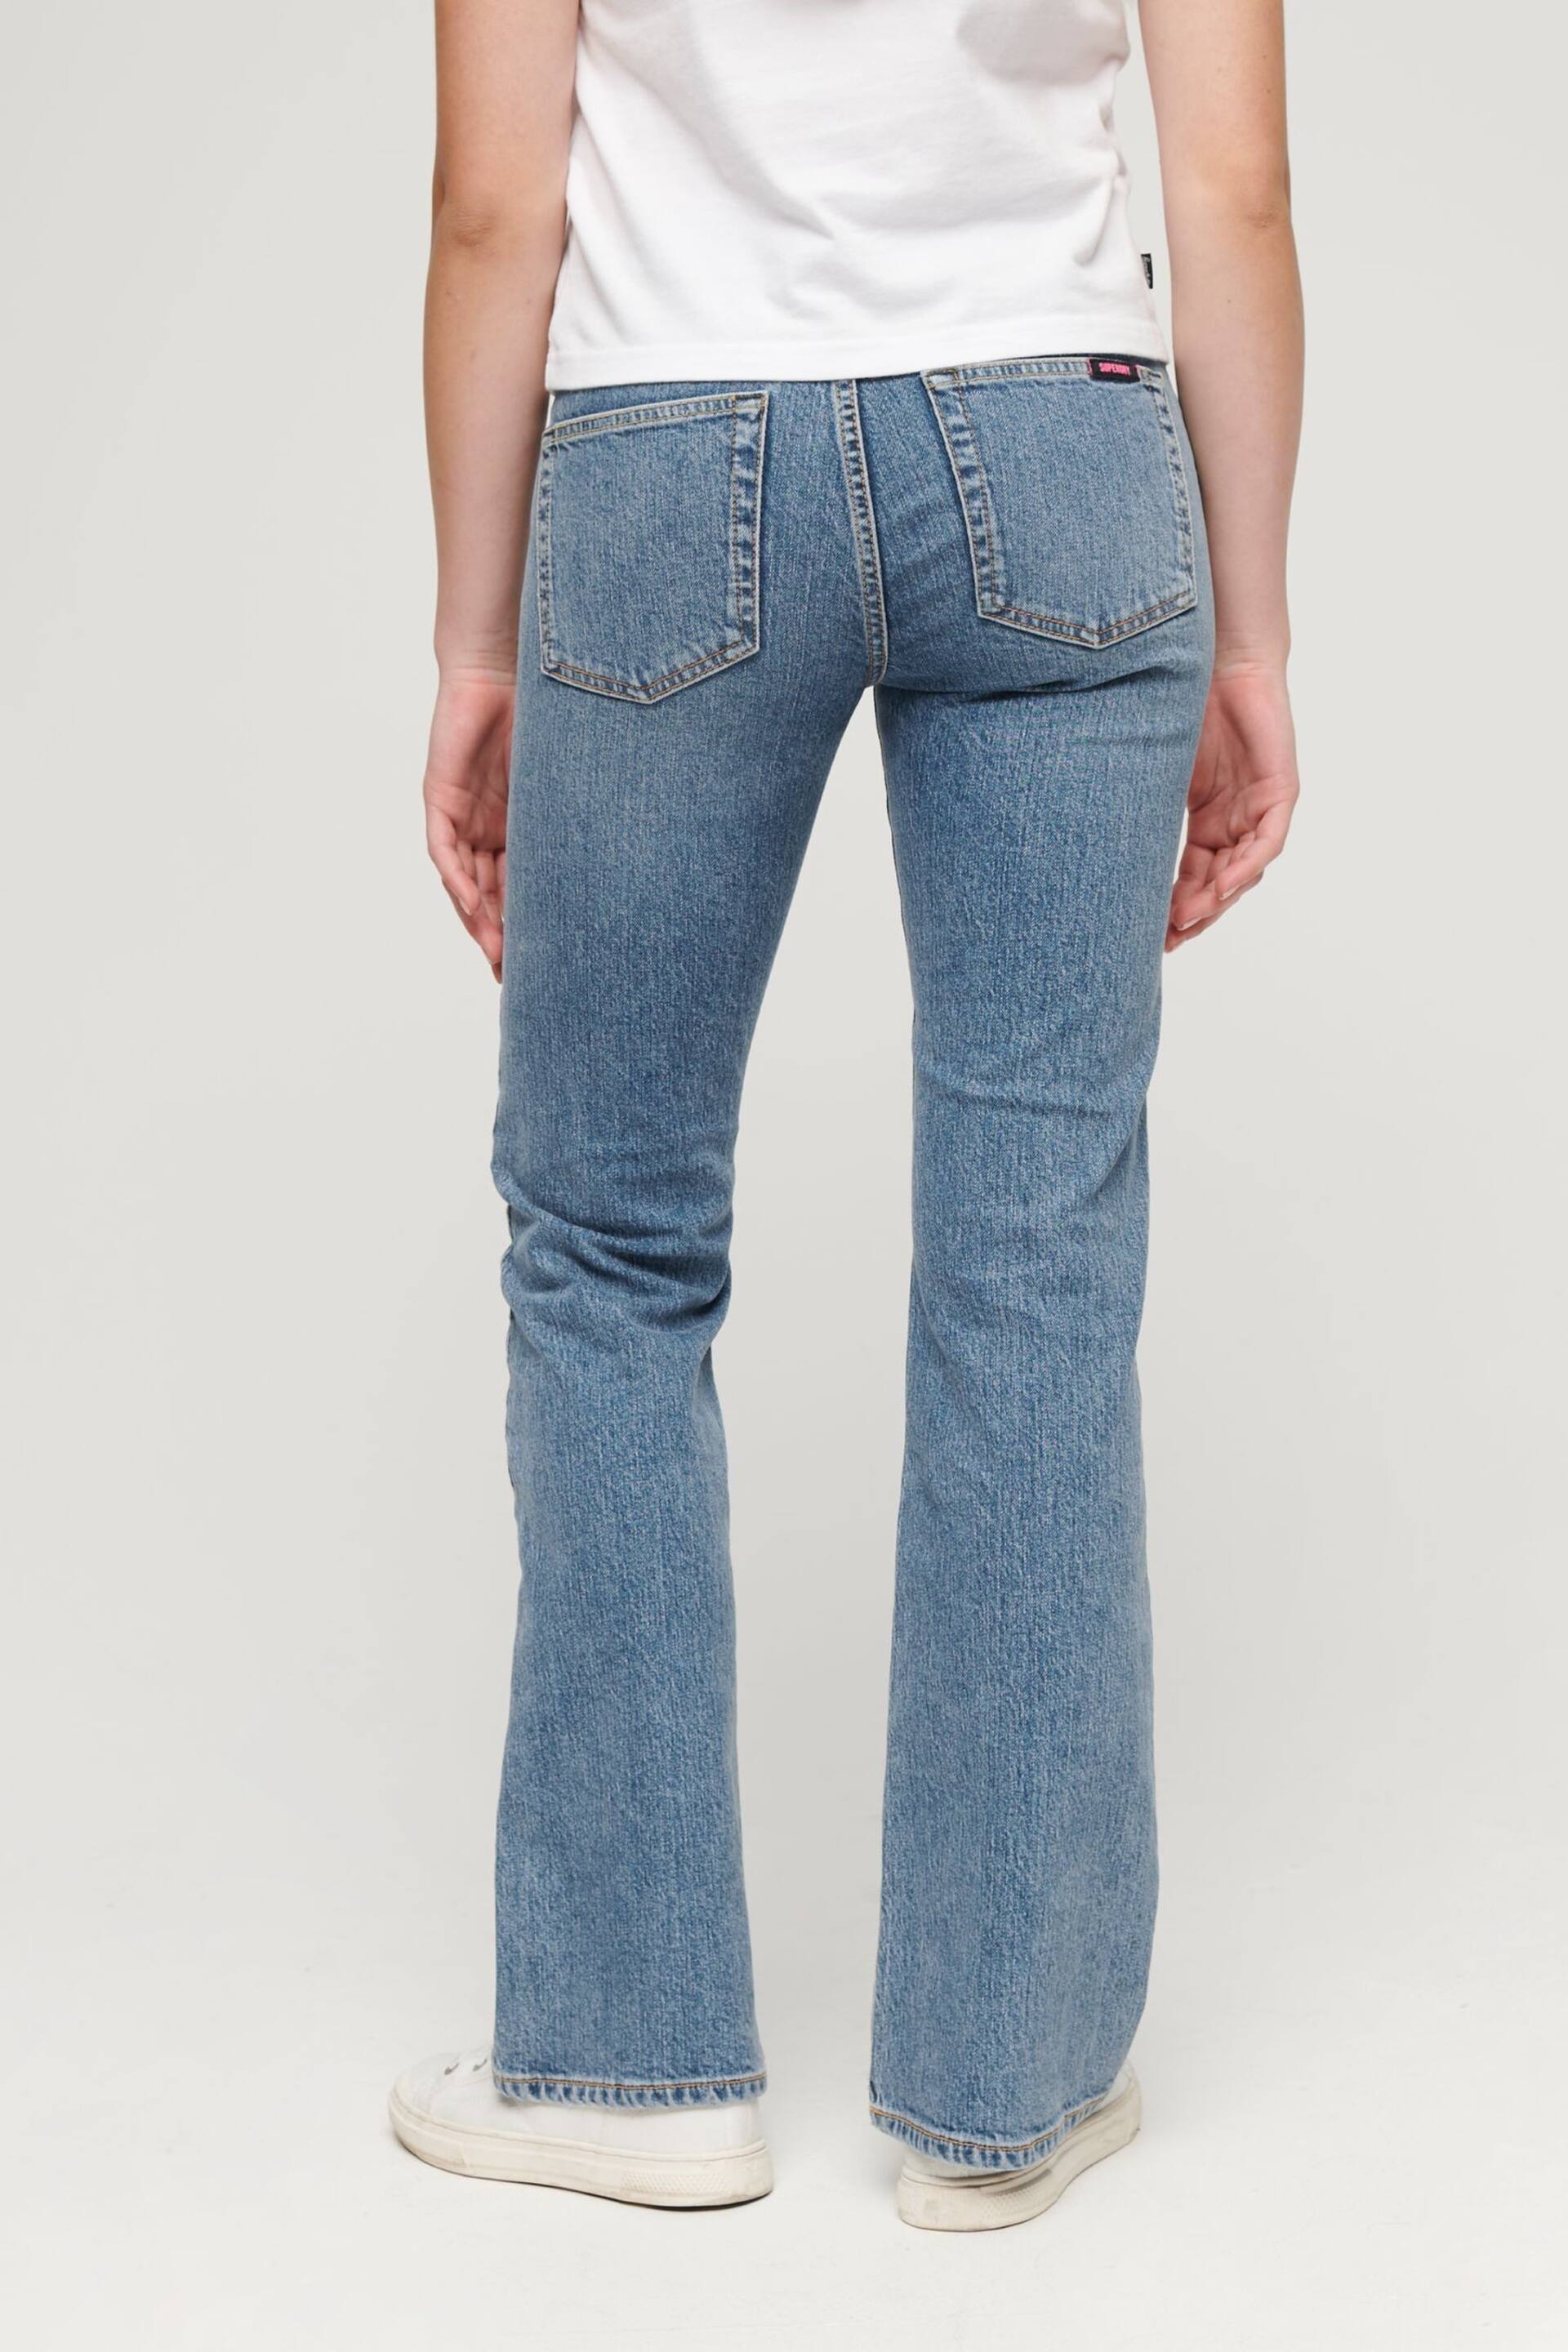 Superdry Light Blue Mid Rise Slim Flare Jeans - Image 2 of 7